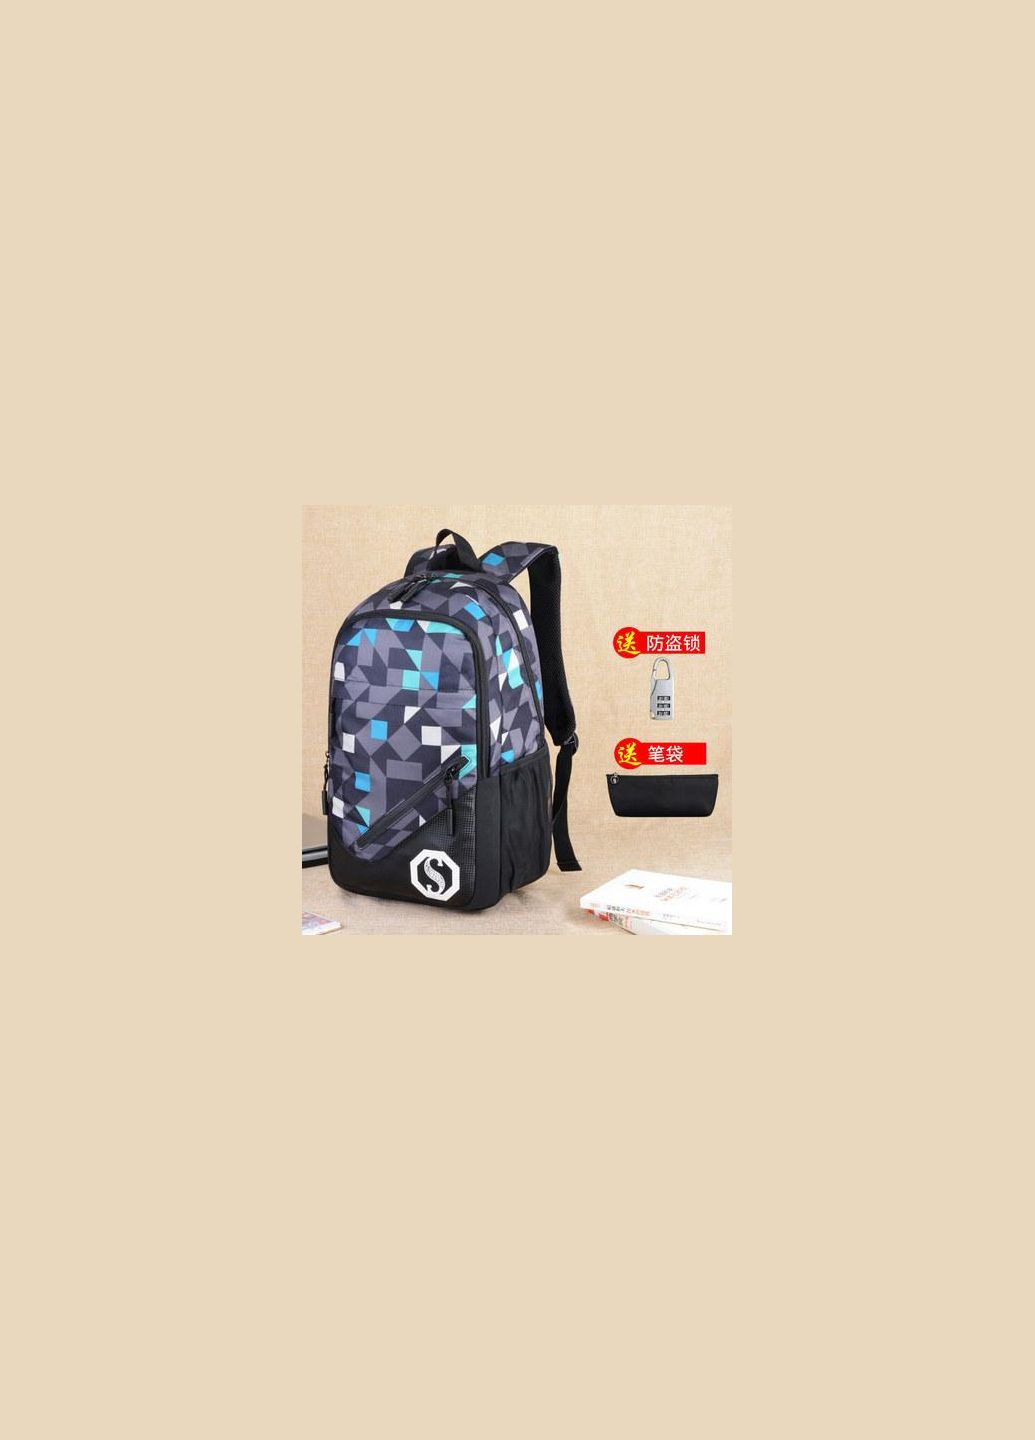 Рюкзак с кодовым замком, пеналом Senkey&Style (276070616)